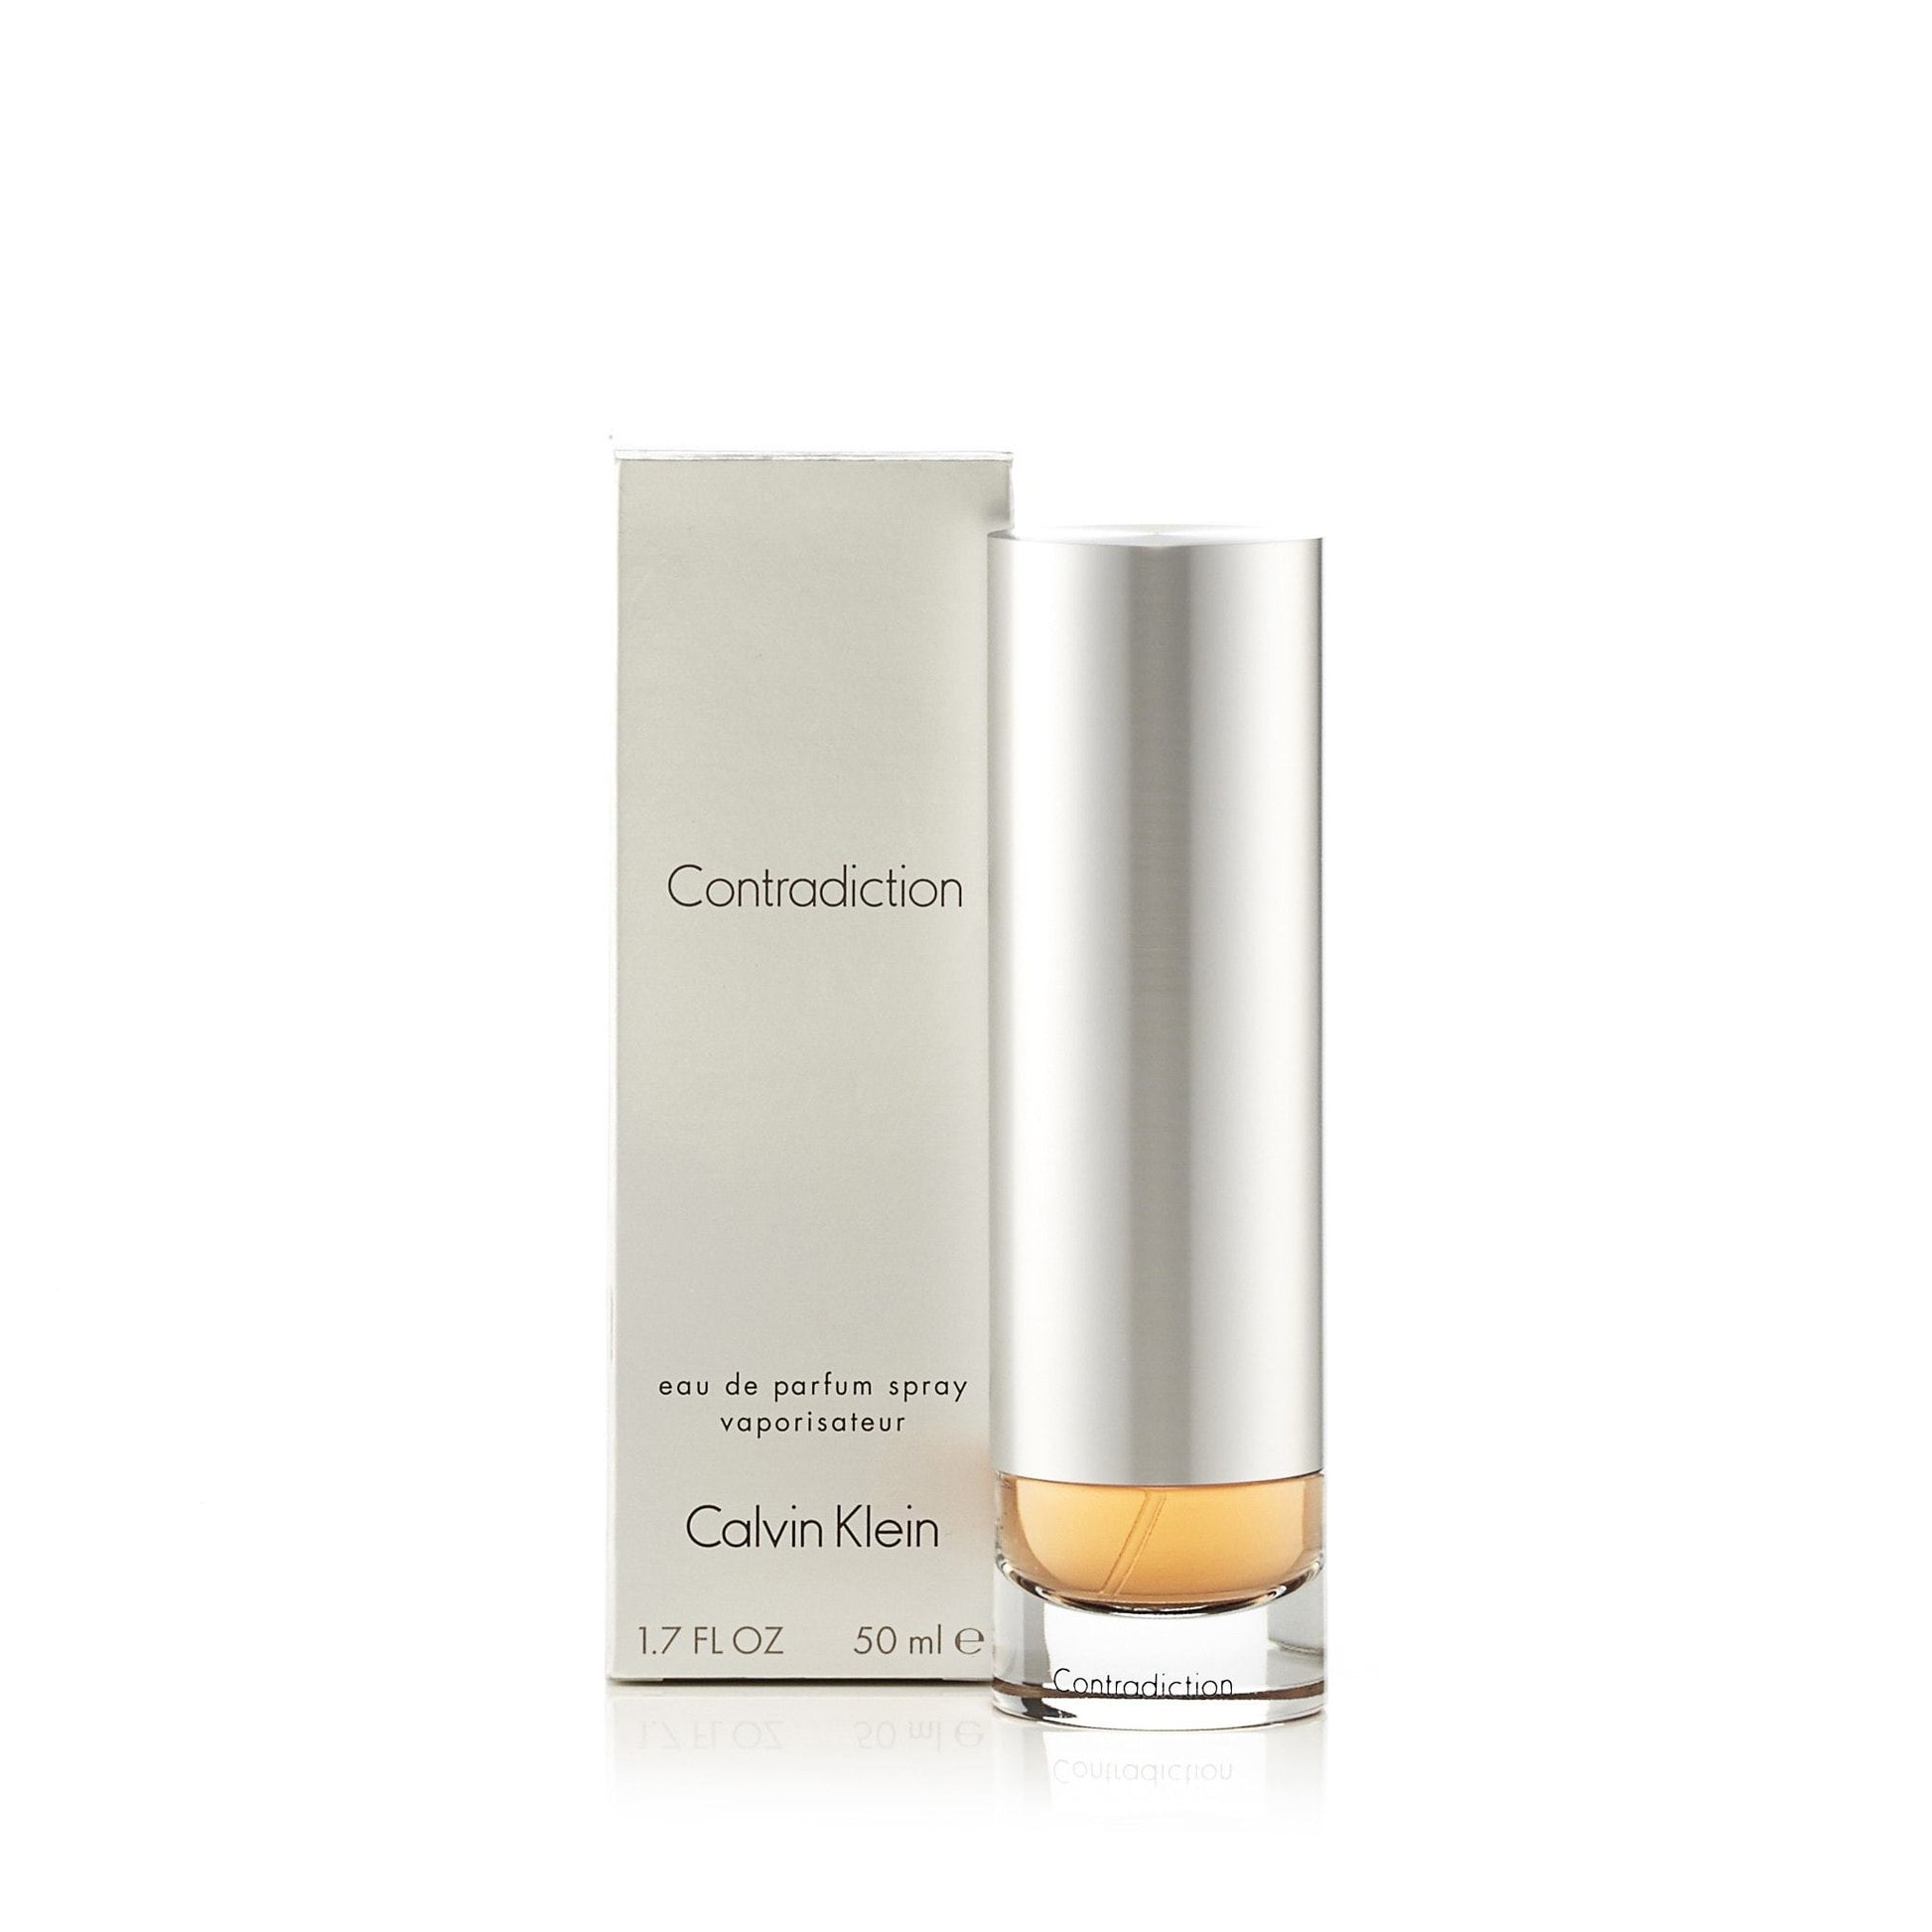 Contradiction Eau de Parfum Spray for Women by Calvin Klein, Product image 4